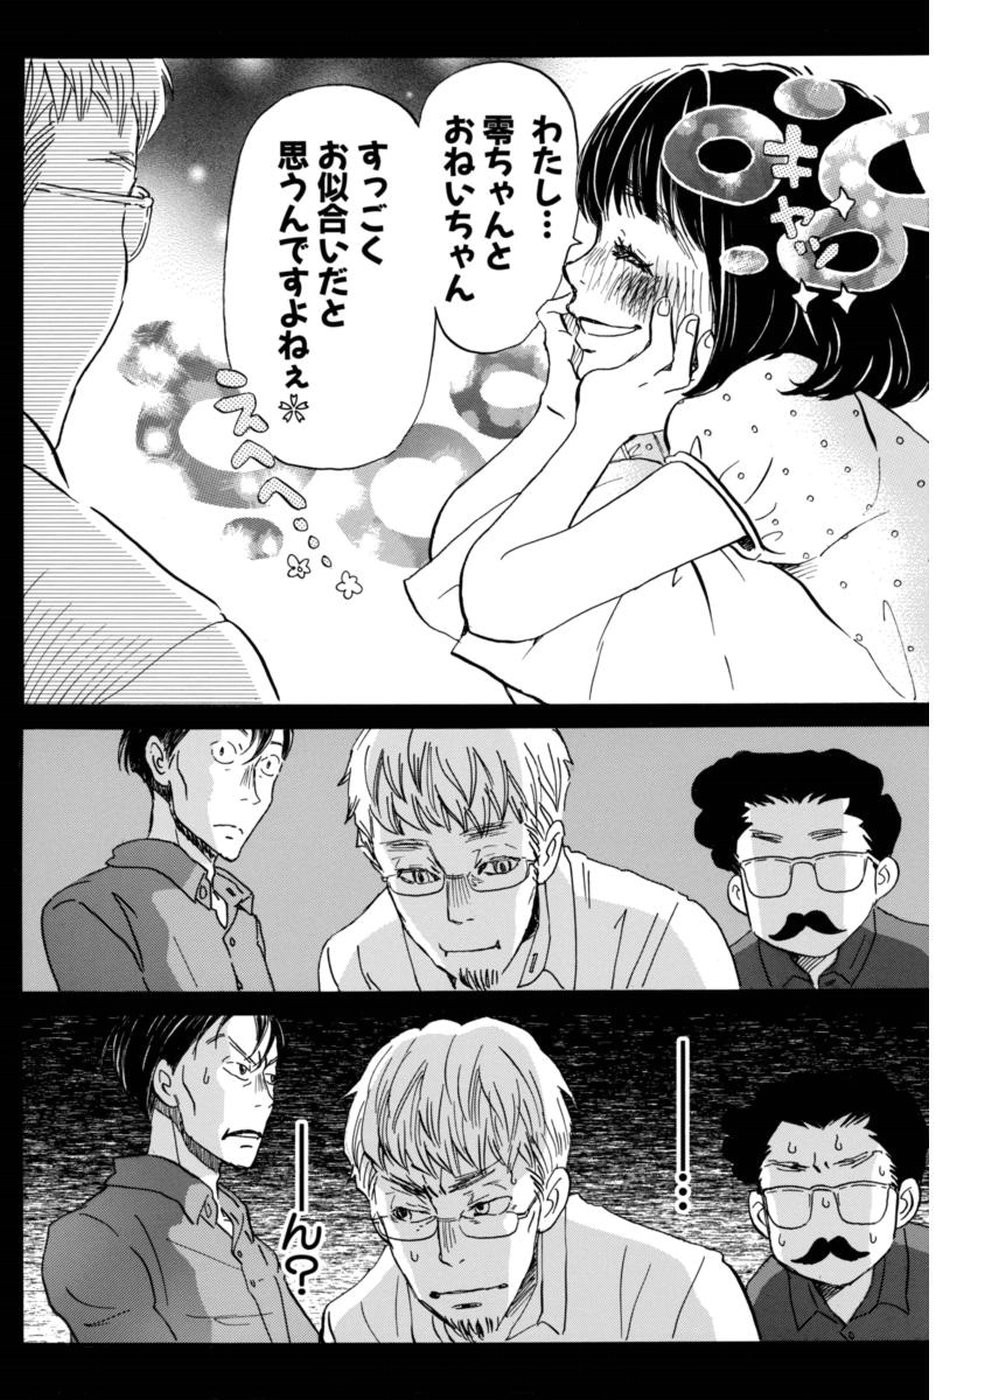 3 Gatsu no Lion - Chapter 147 - Page 10